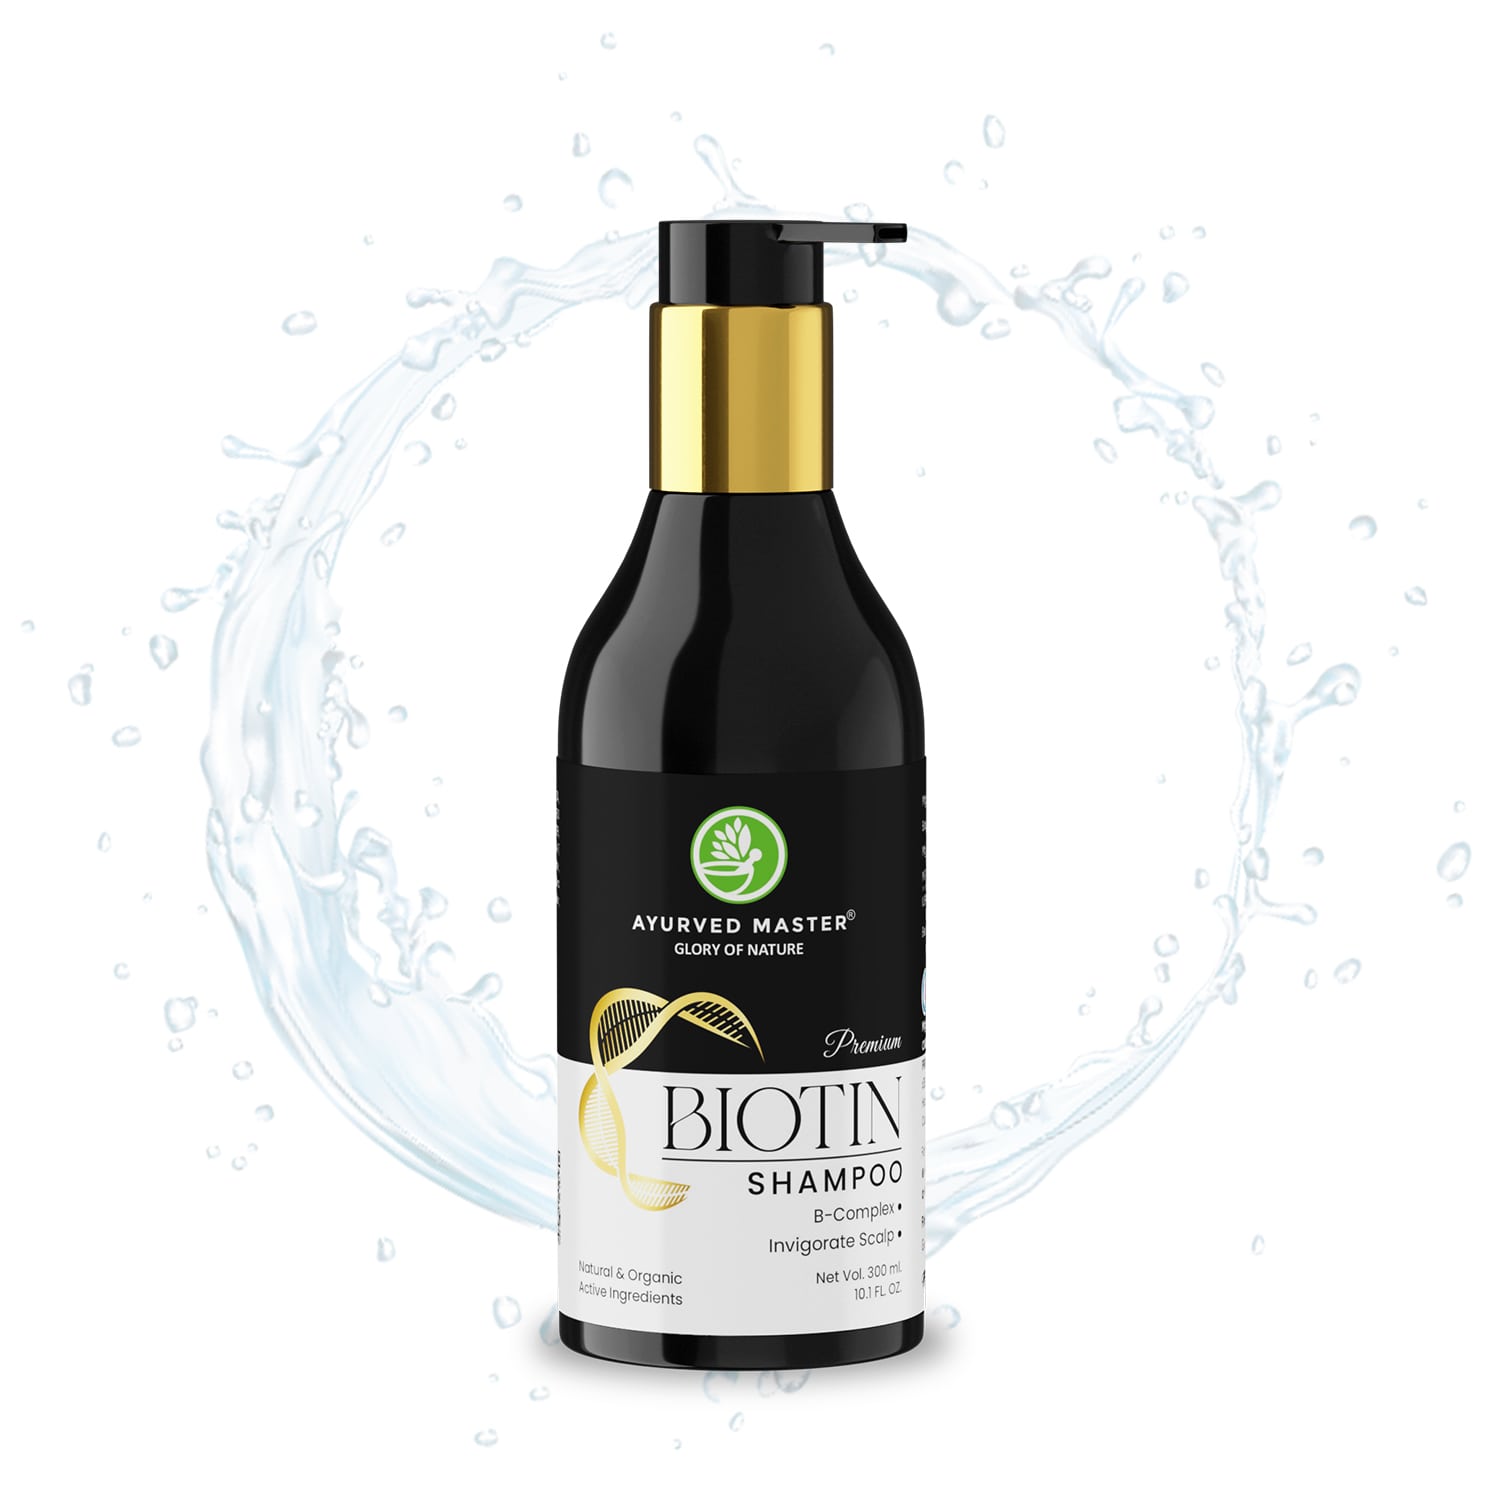 Ayurved Master Premium Biotin Radiance Renewal Shampoo with Vitamin B-complex & invigorate Scalp